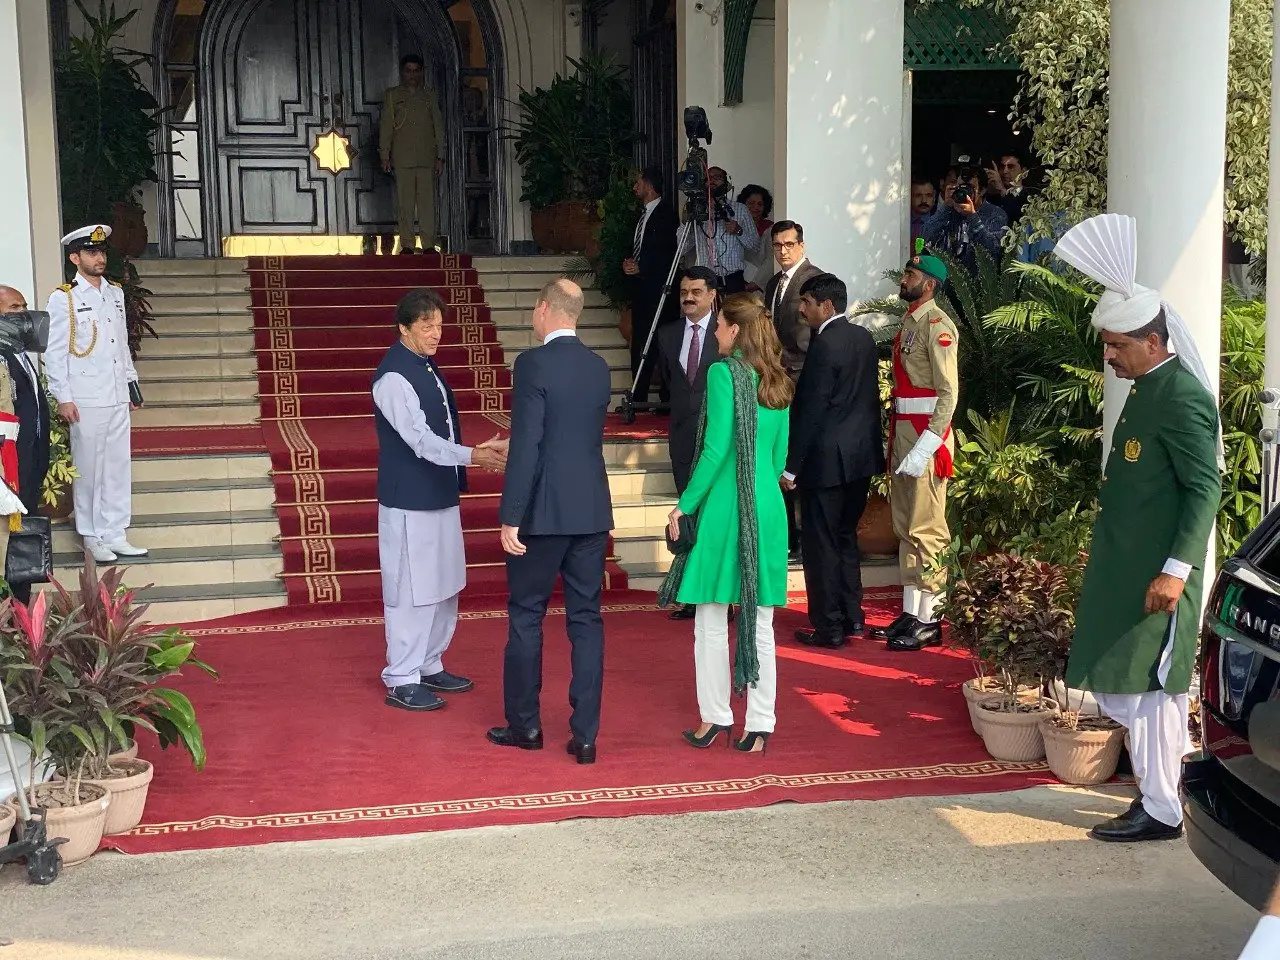 Duchess of Cambridge in Catherine Walker tunic Maheen khan trouser and emmy london pumps to meet Imran Khan